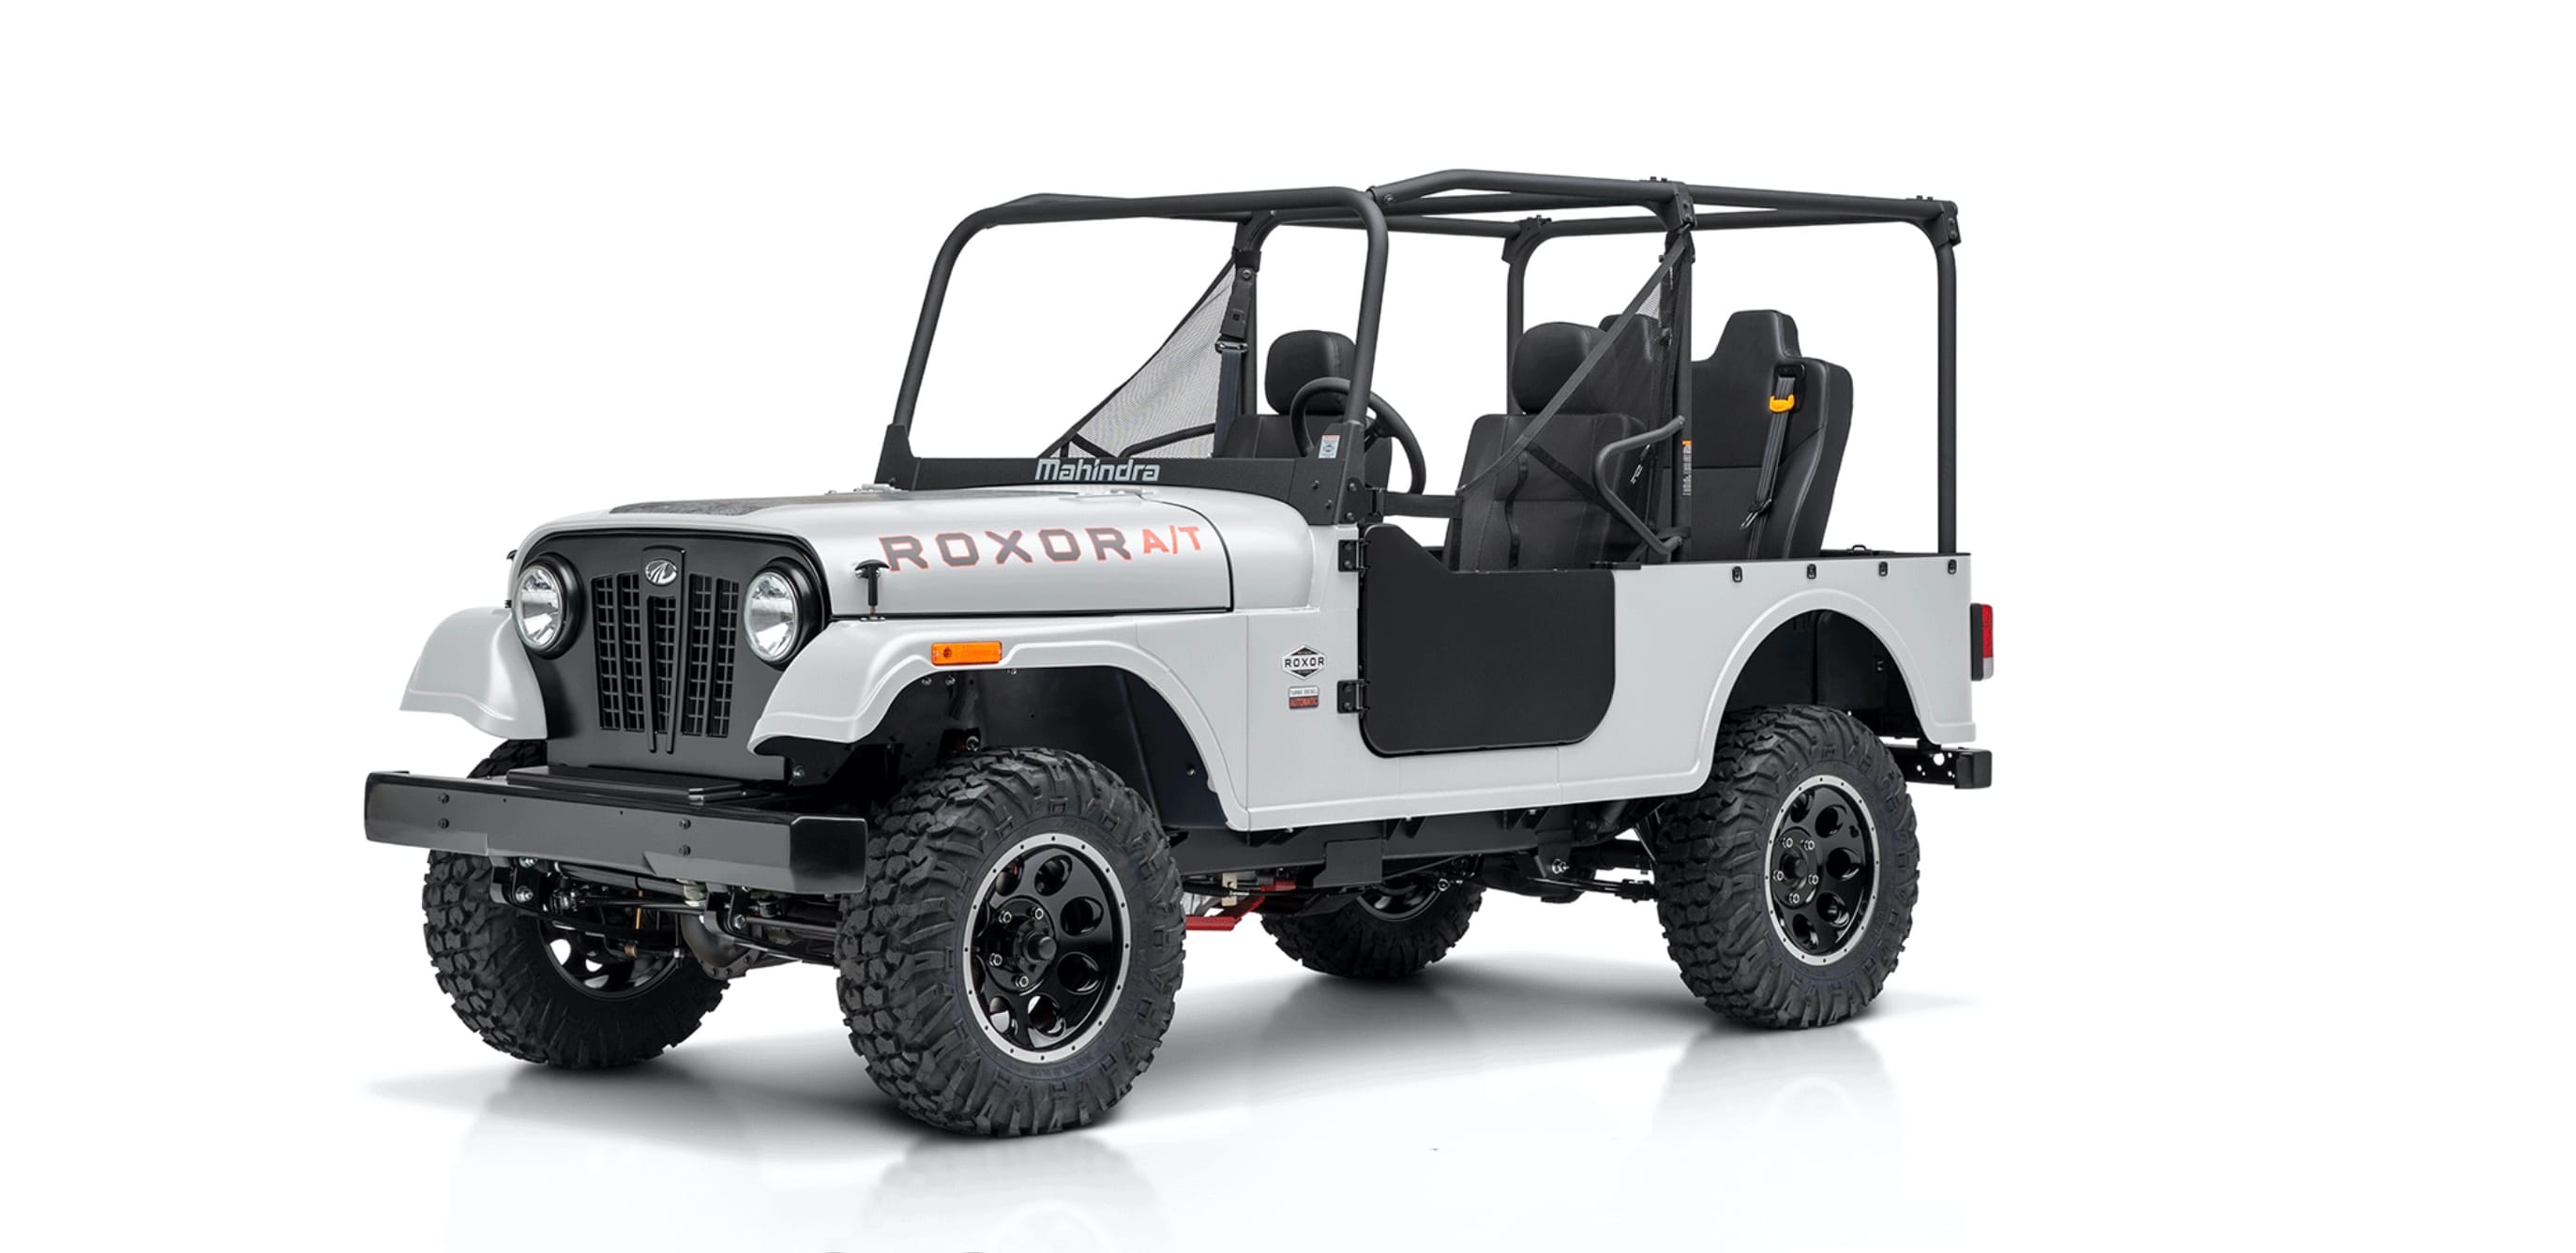 Jeep Blocks Mahindra Over Copycat Design Caradvice